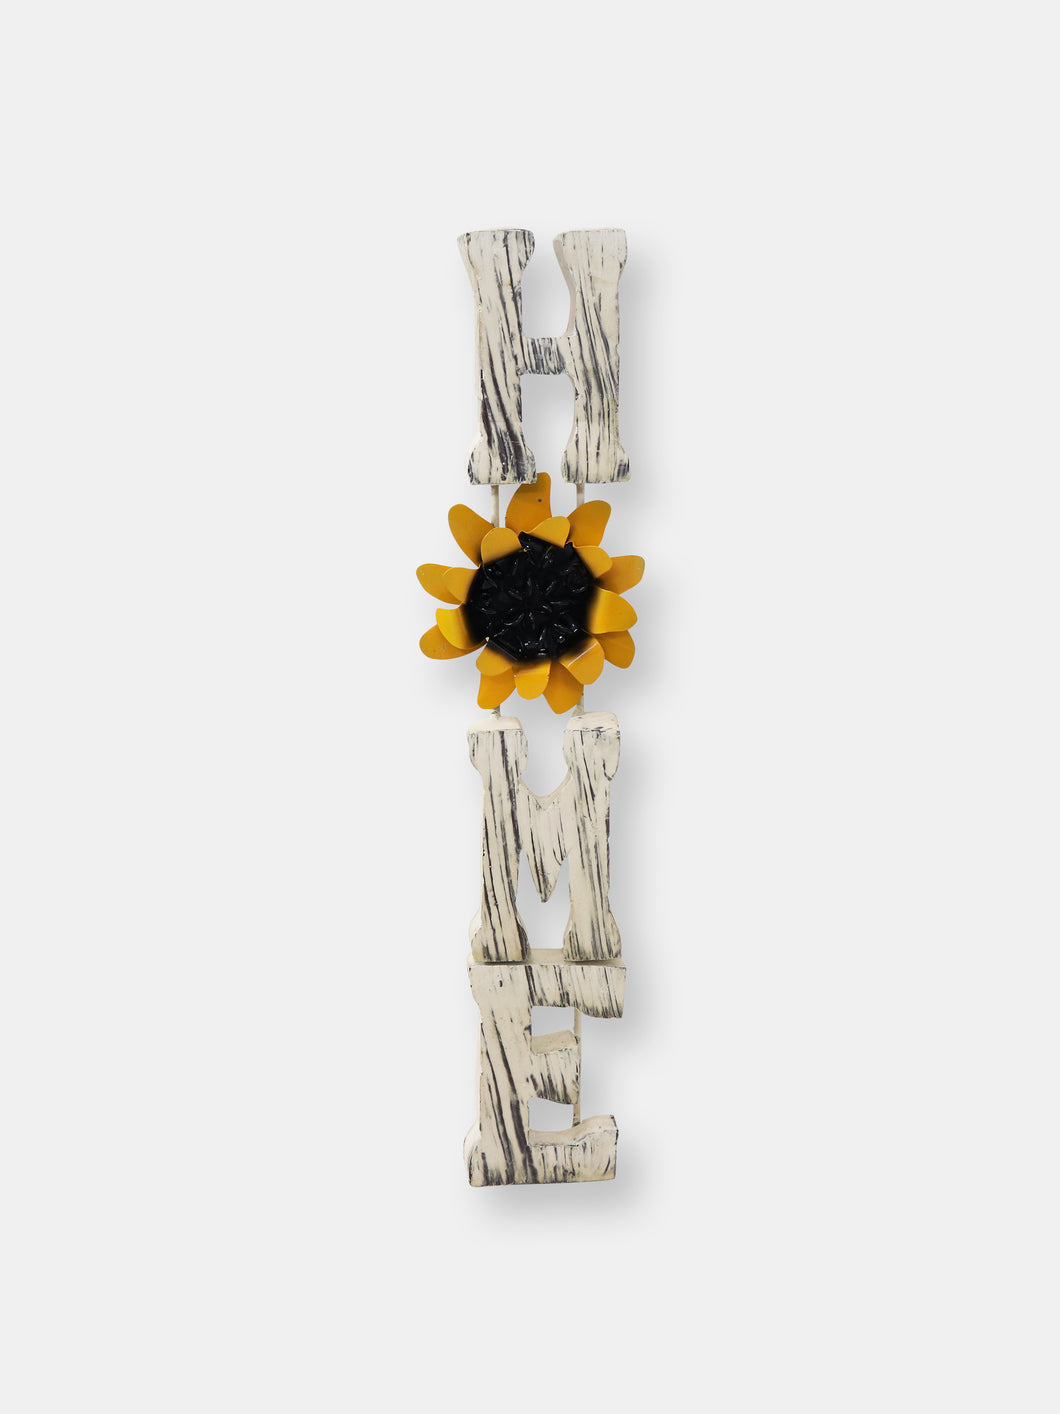 Indoor/outdoor Metal Home Sign with Decorative Sunflower - 24.5